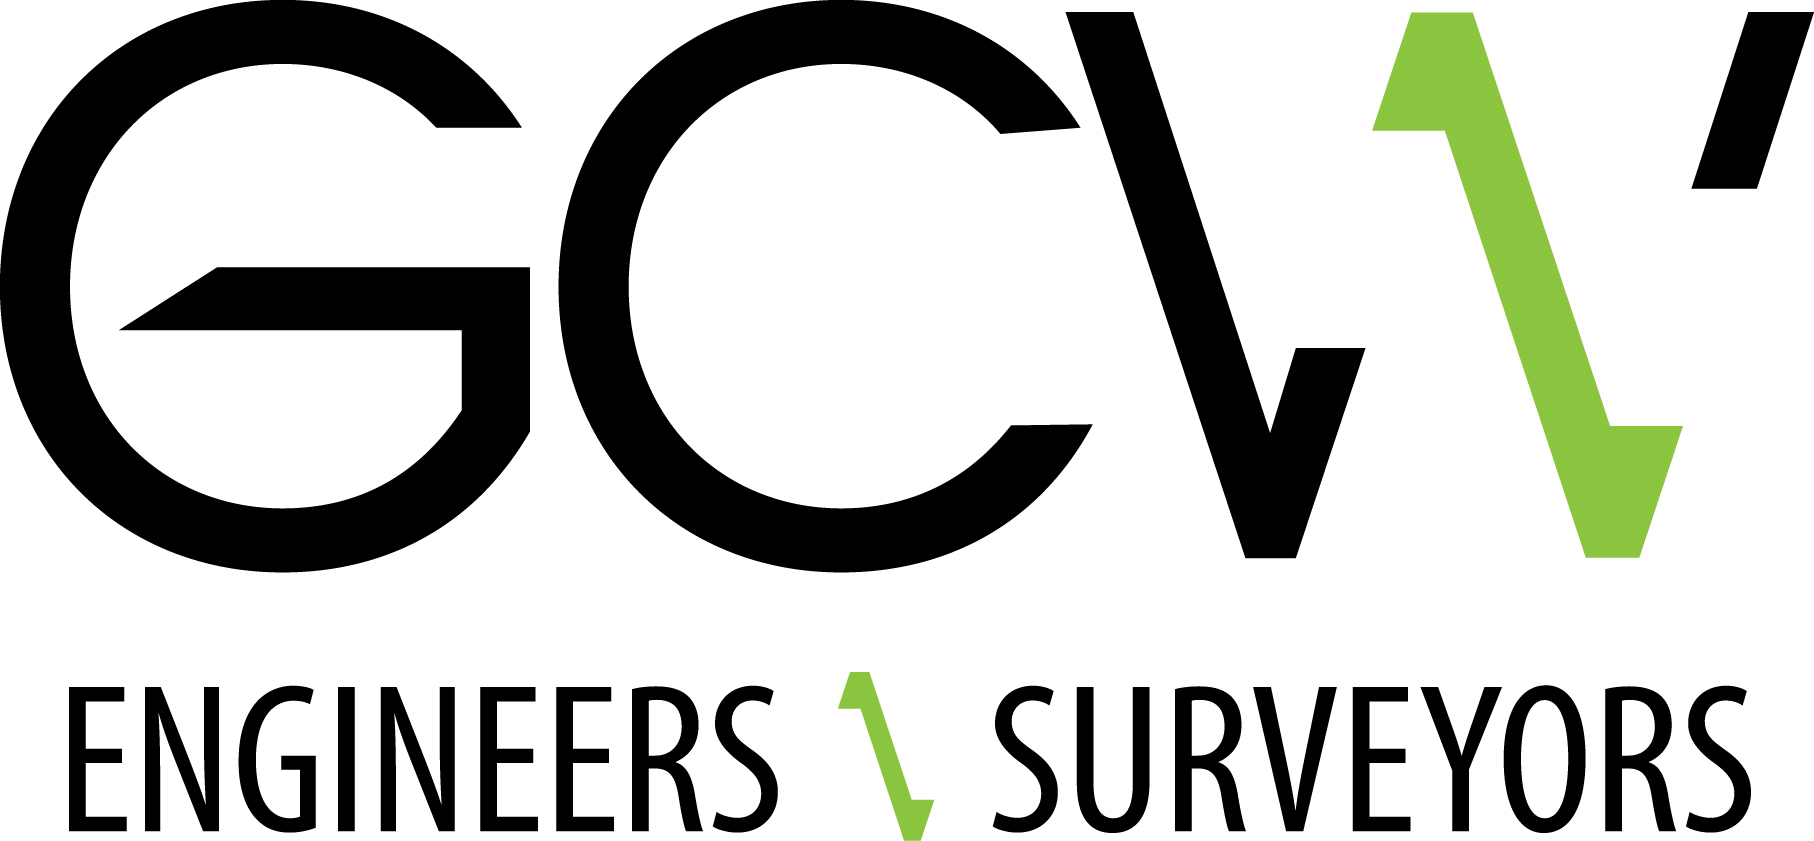 GCW Engineers \ Surveyors